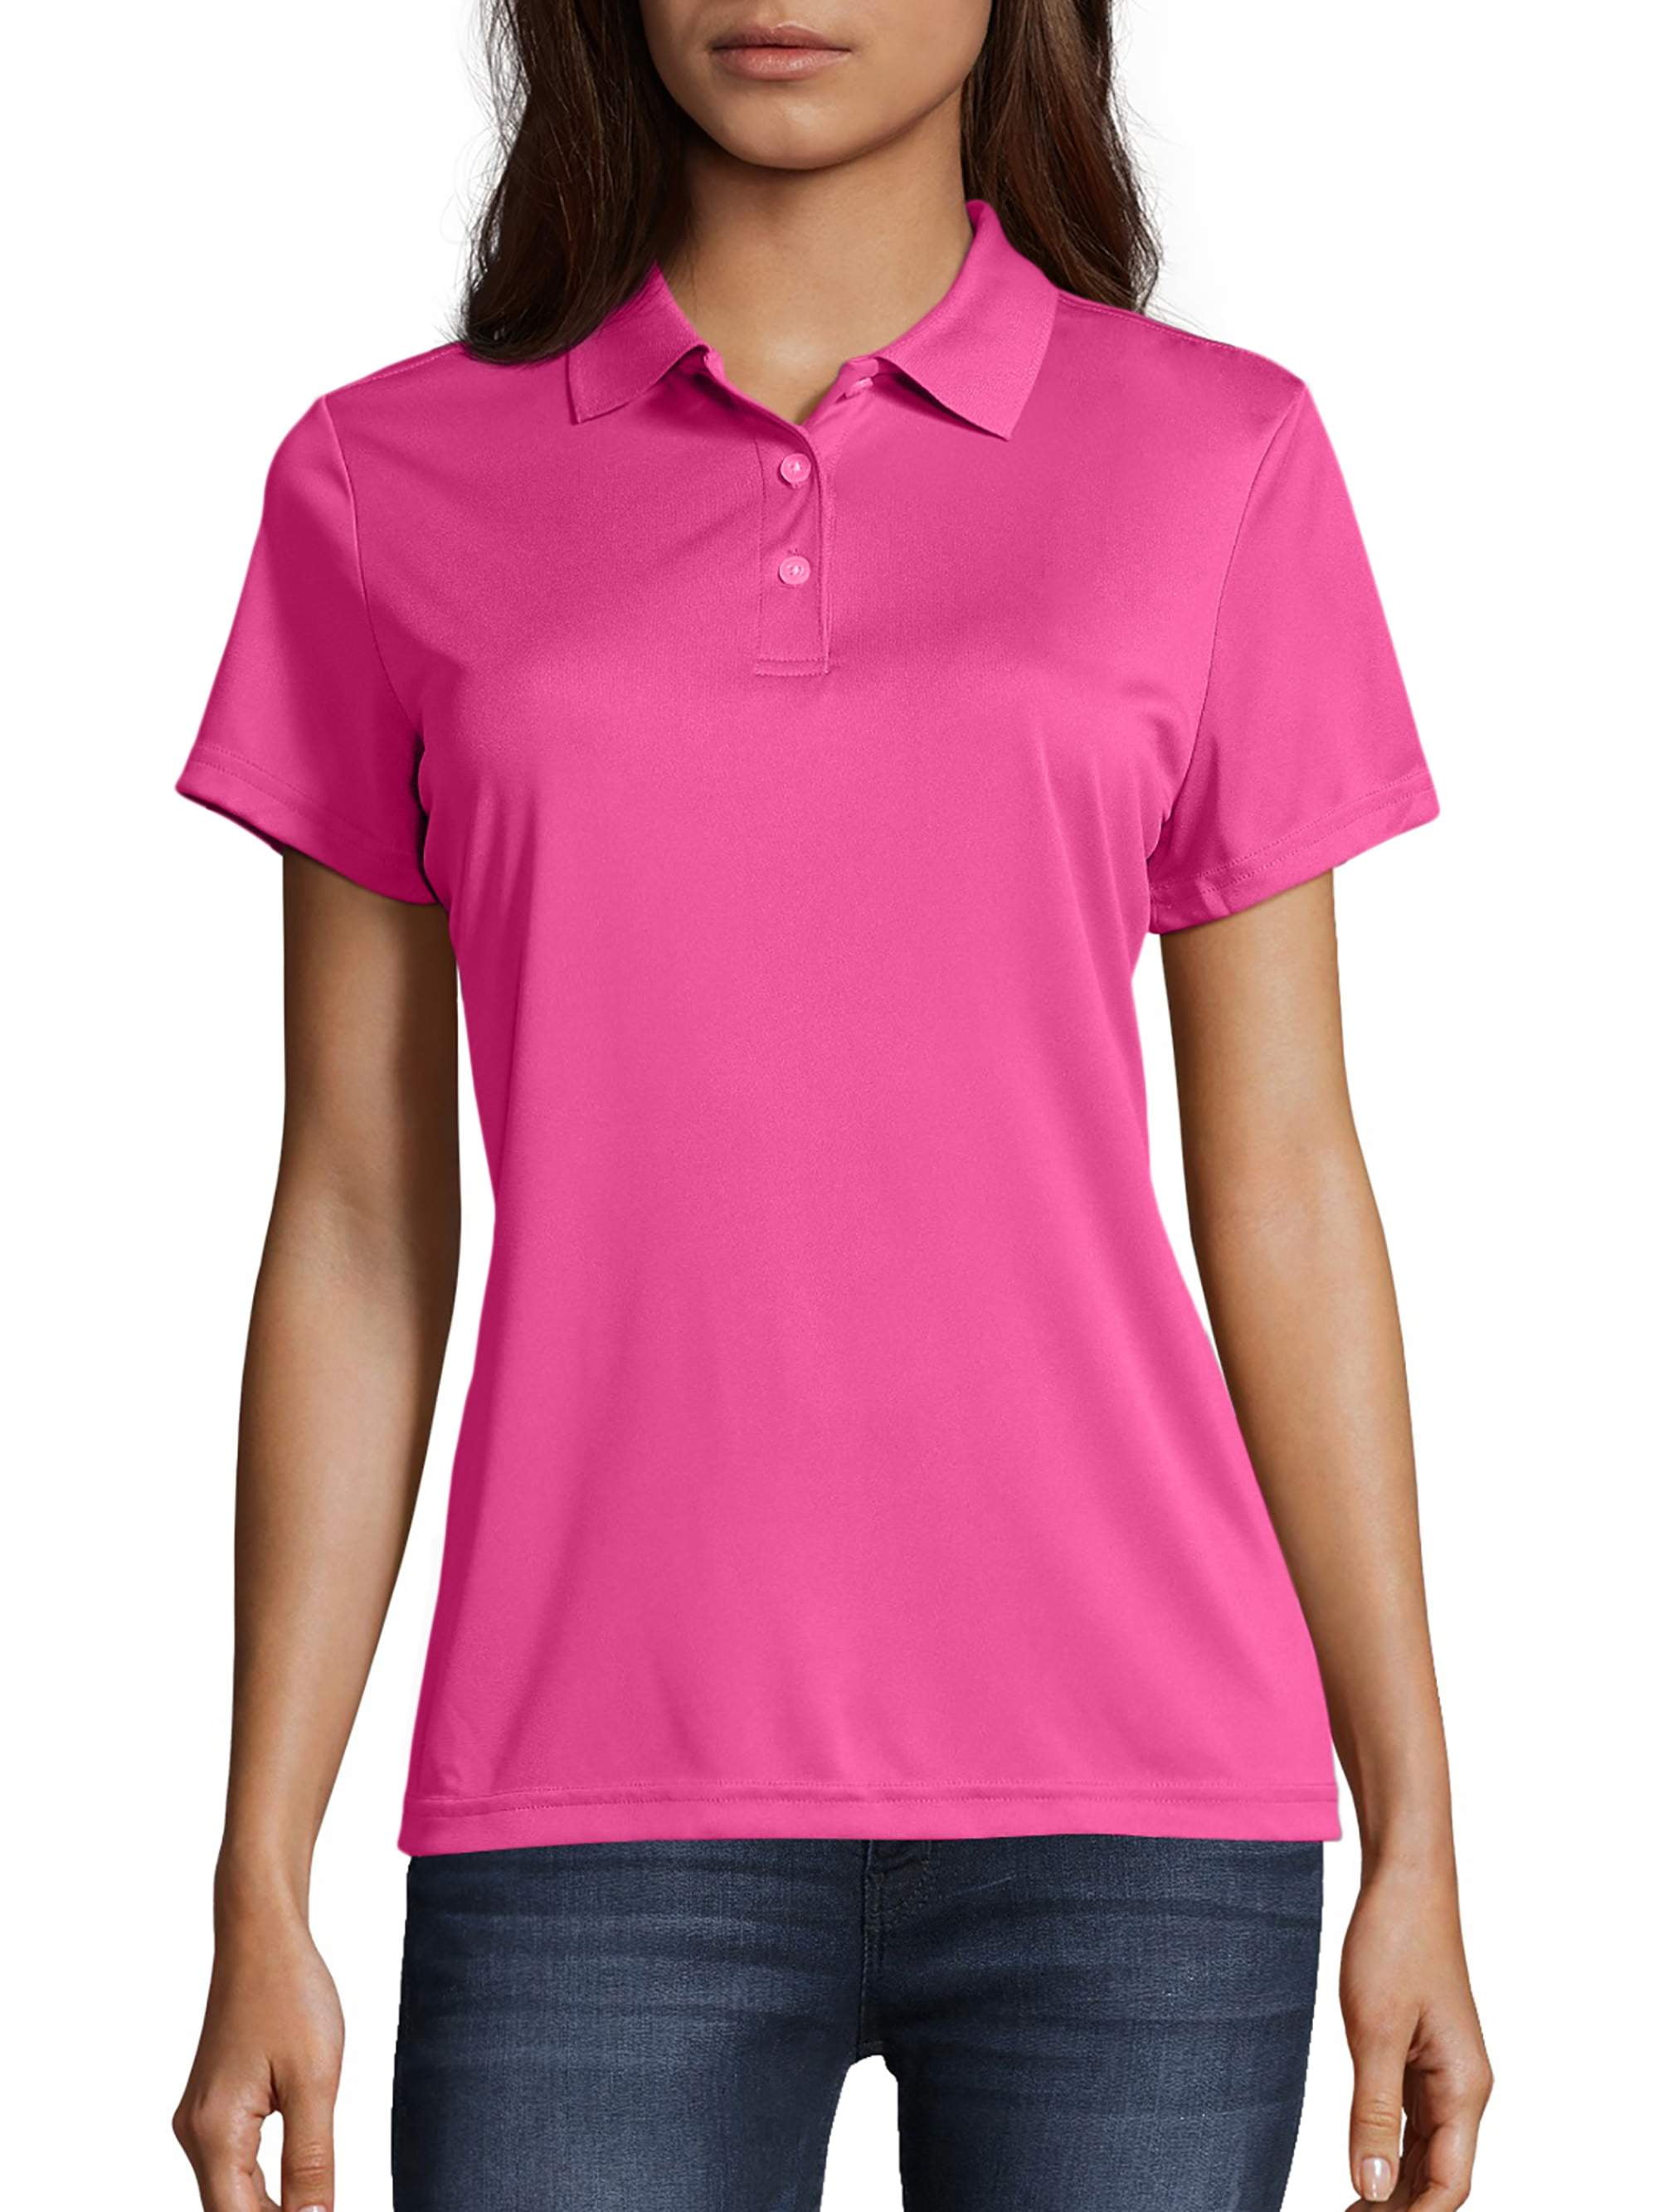 Reebok Women's 100% Cotton Polo Sport Shirt 4 Button Back to School Work Uniform 